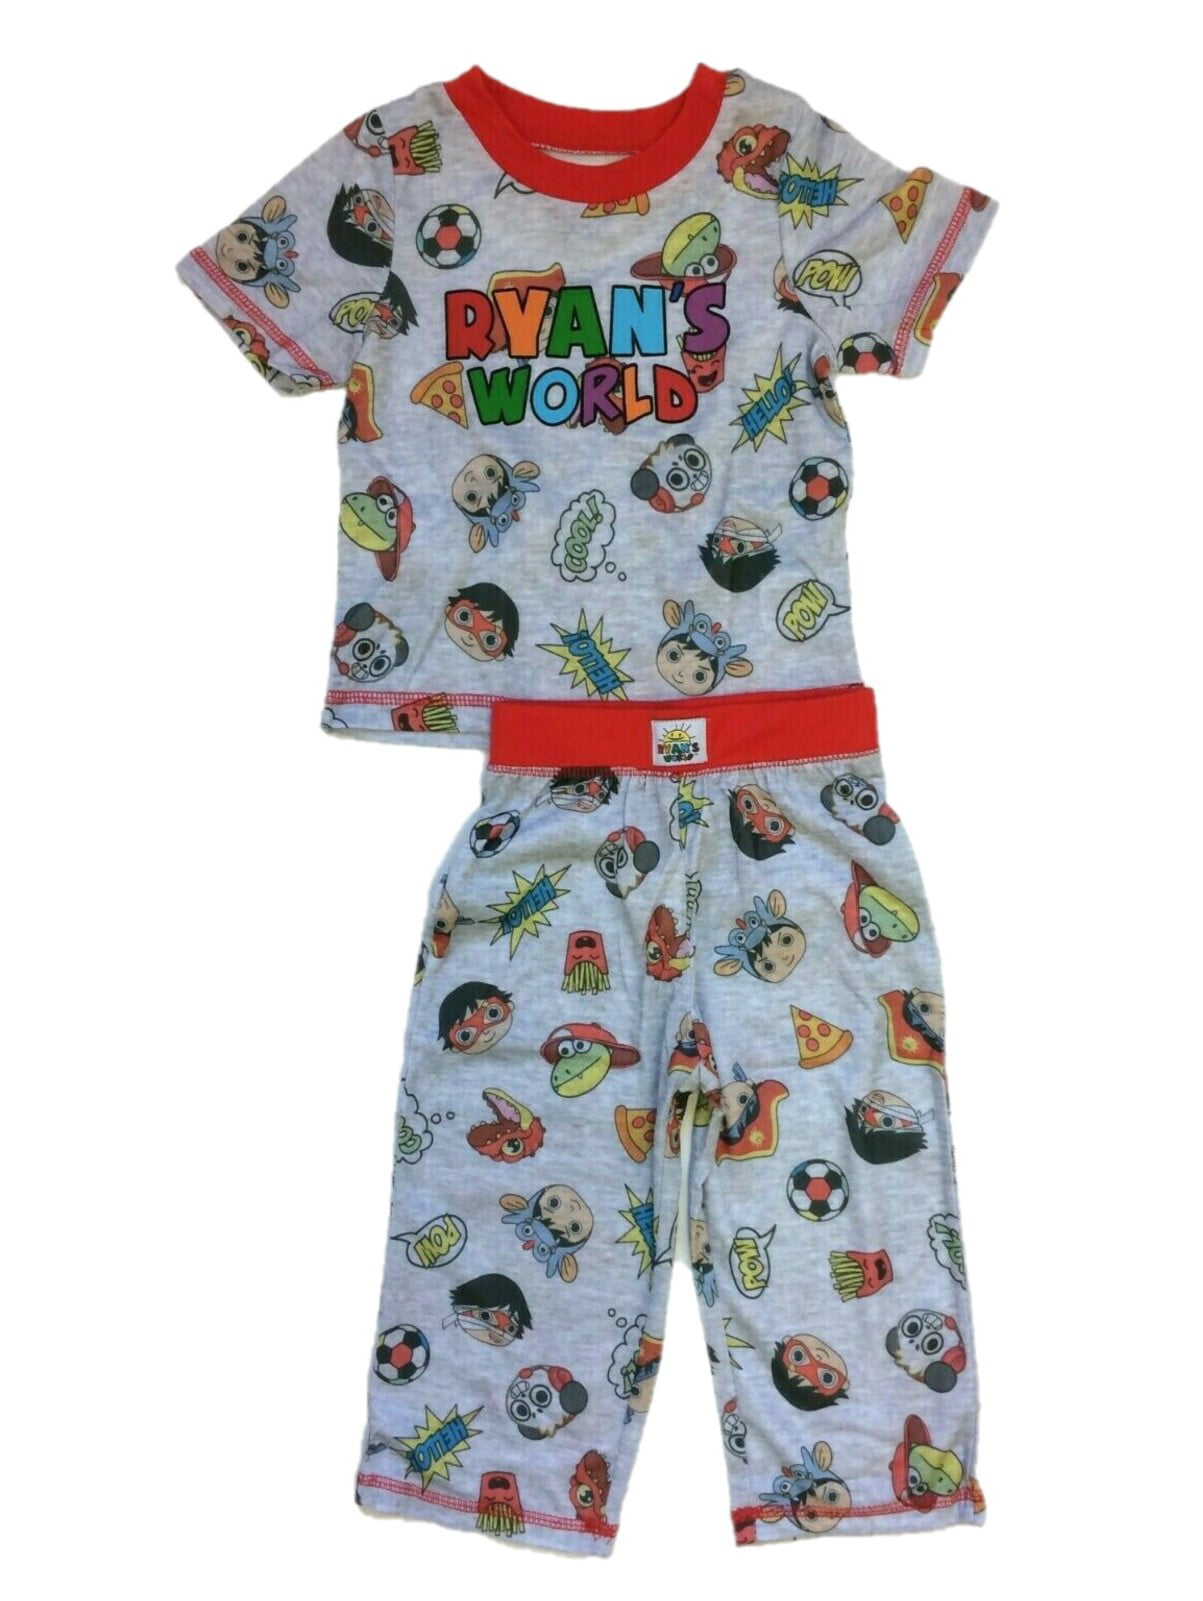 Boys Ryan's World Pyjamas Kids Toy Reviews 2 to 8 Years Red Grey Ryans World 